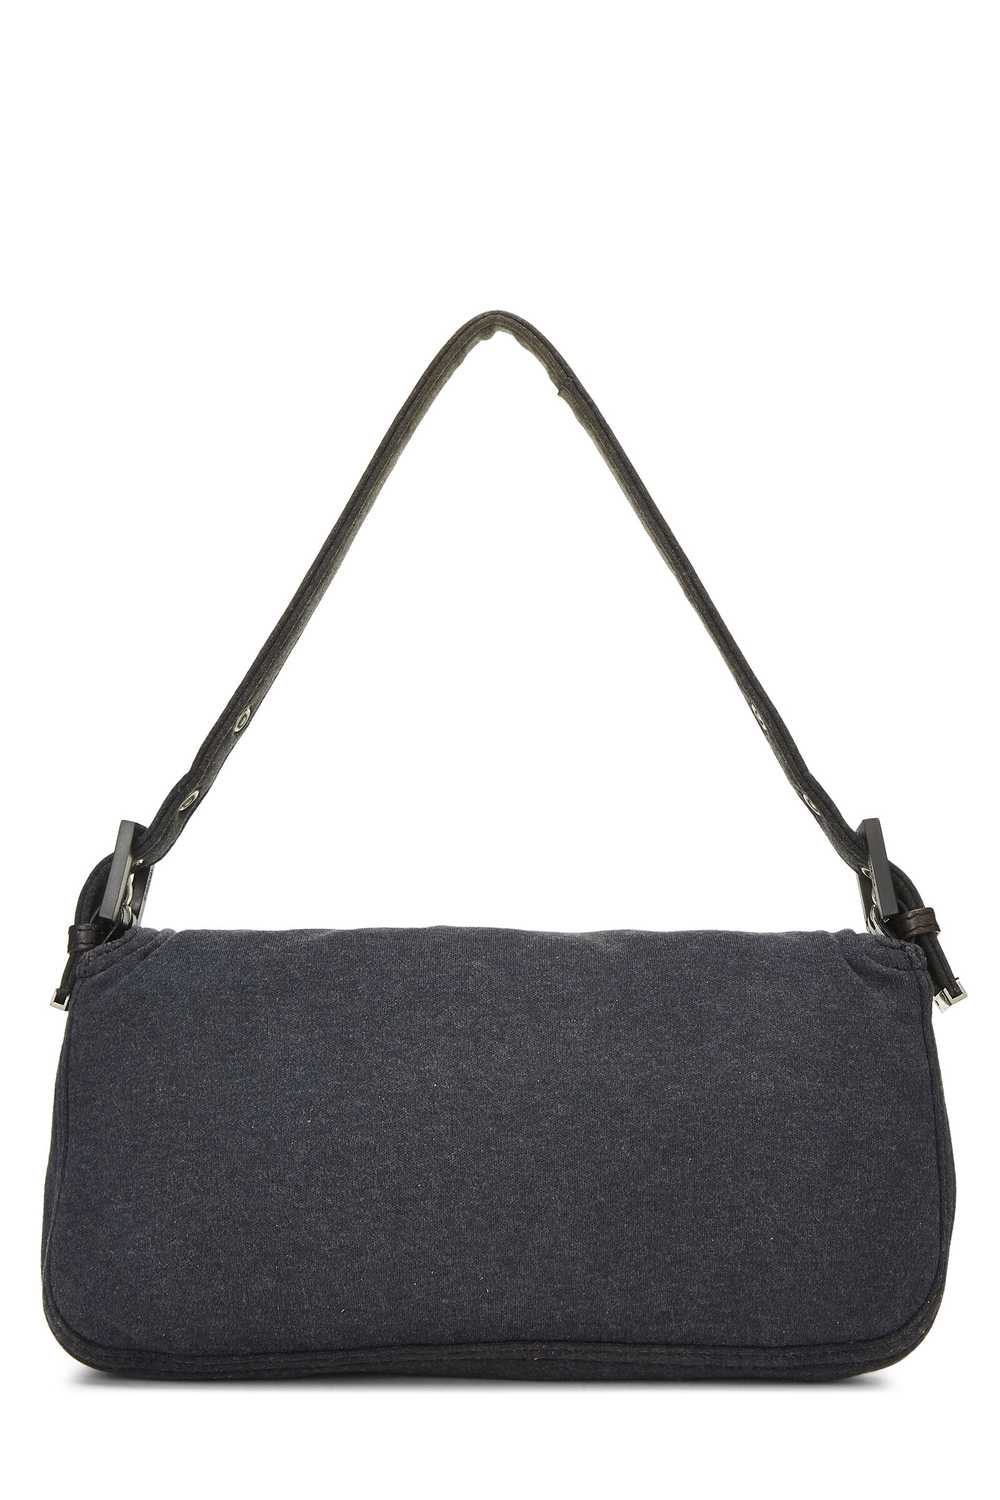 Grey Jersey Knit Baguette - image 4